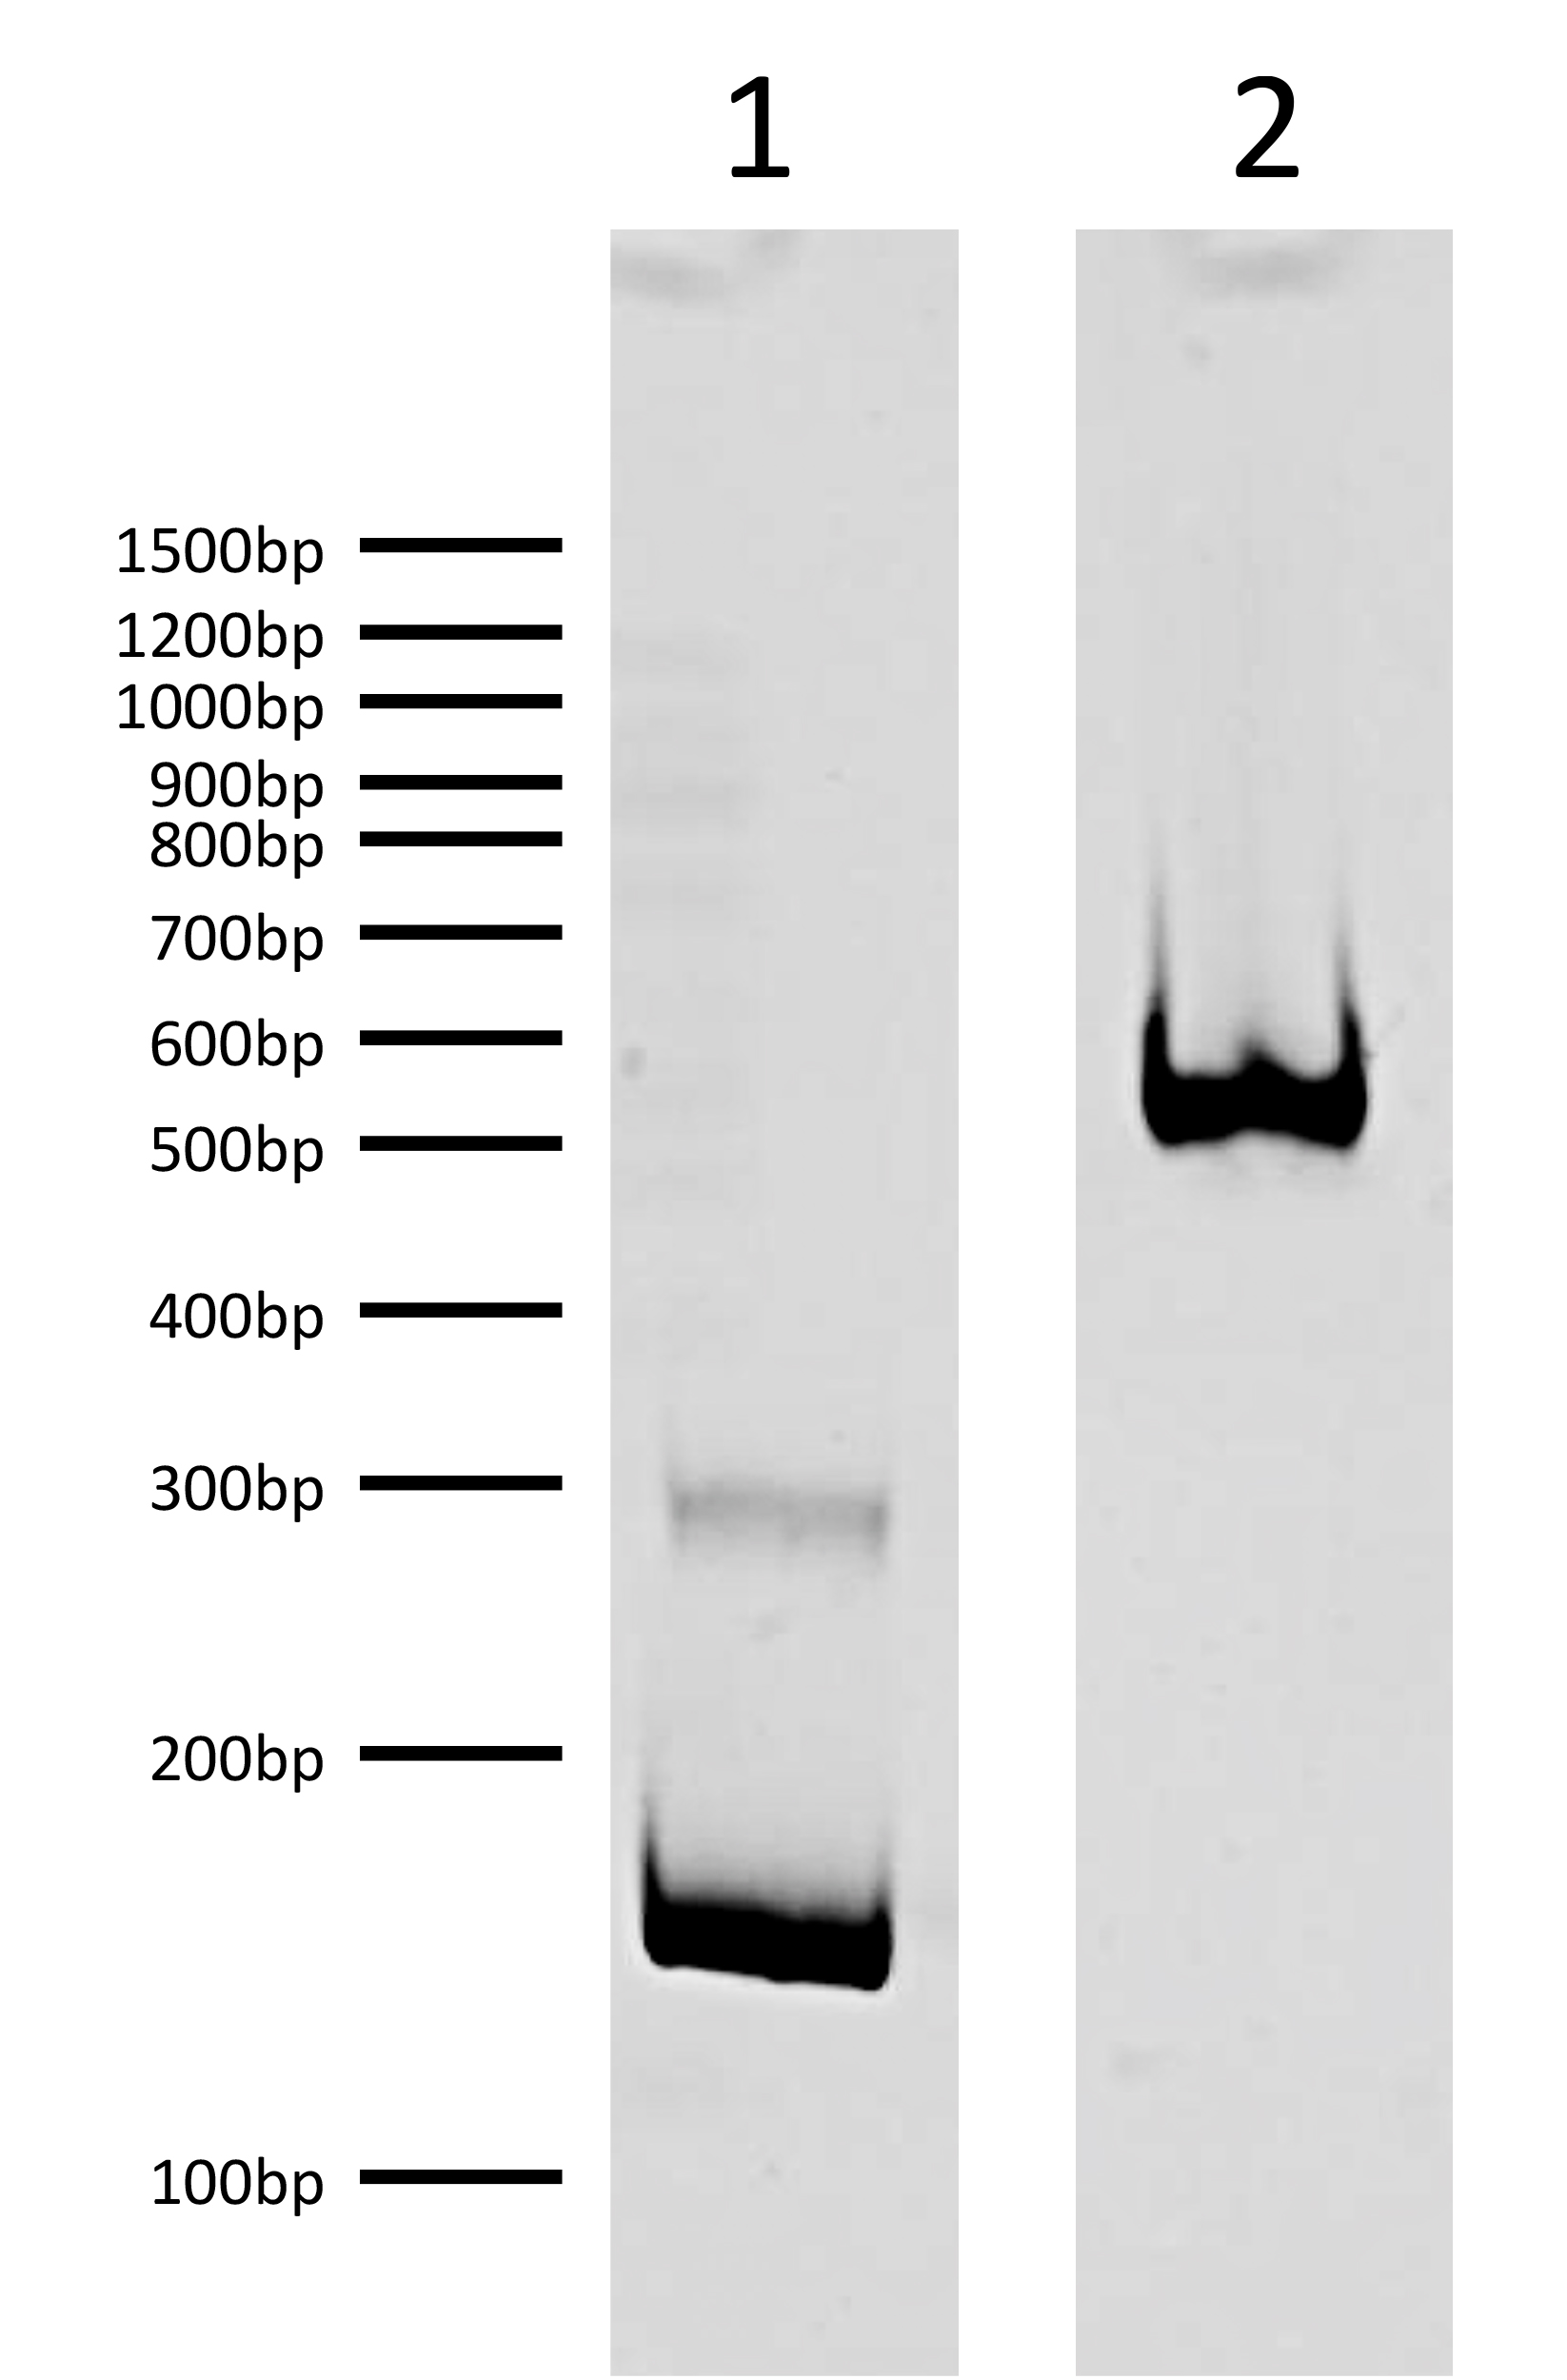 16-0023 DNA Gel Data